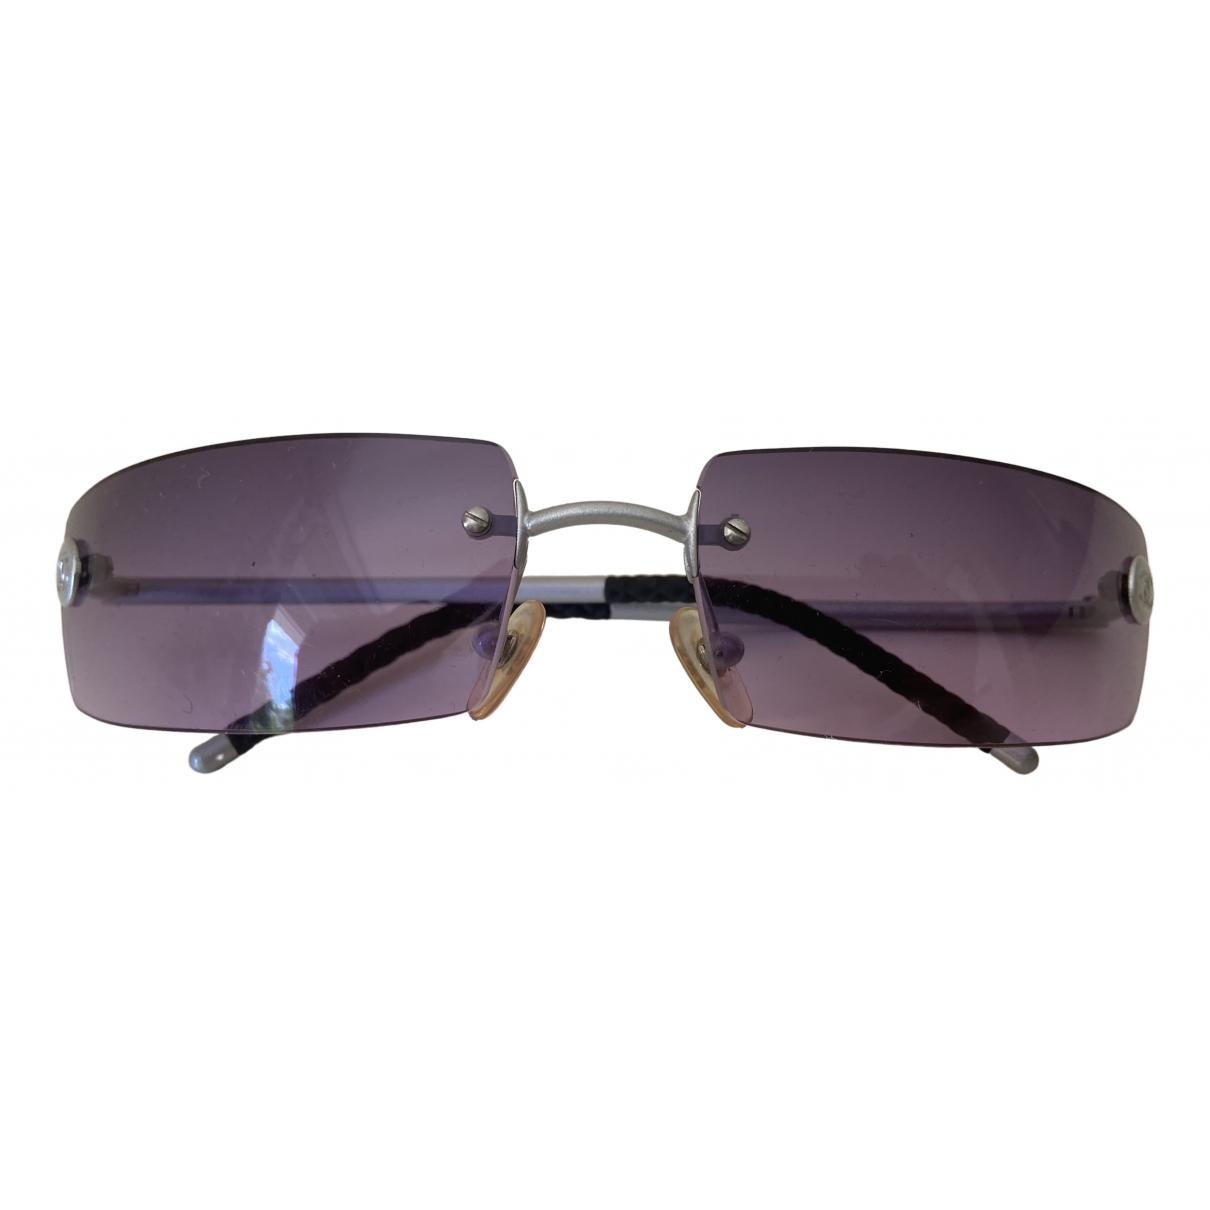 Sunglasses Chanel Purple in Metal - 11631300